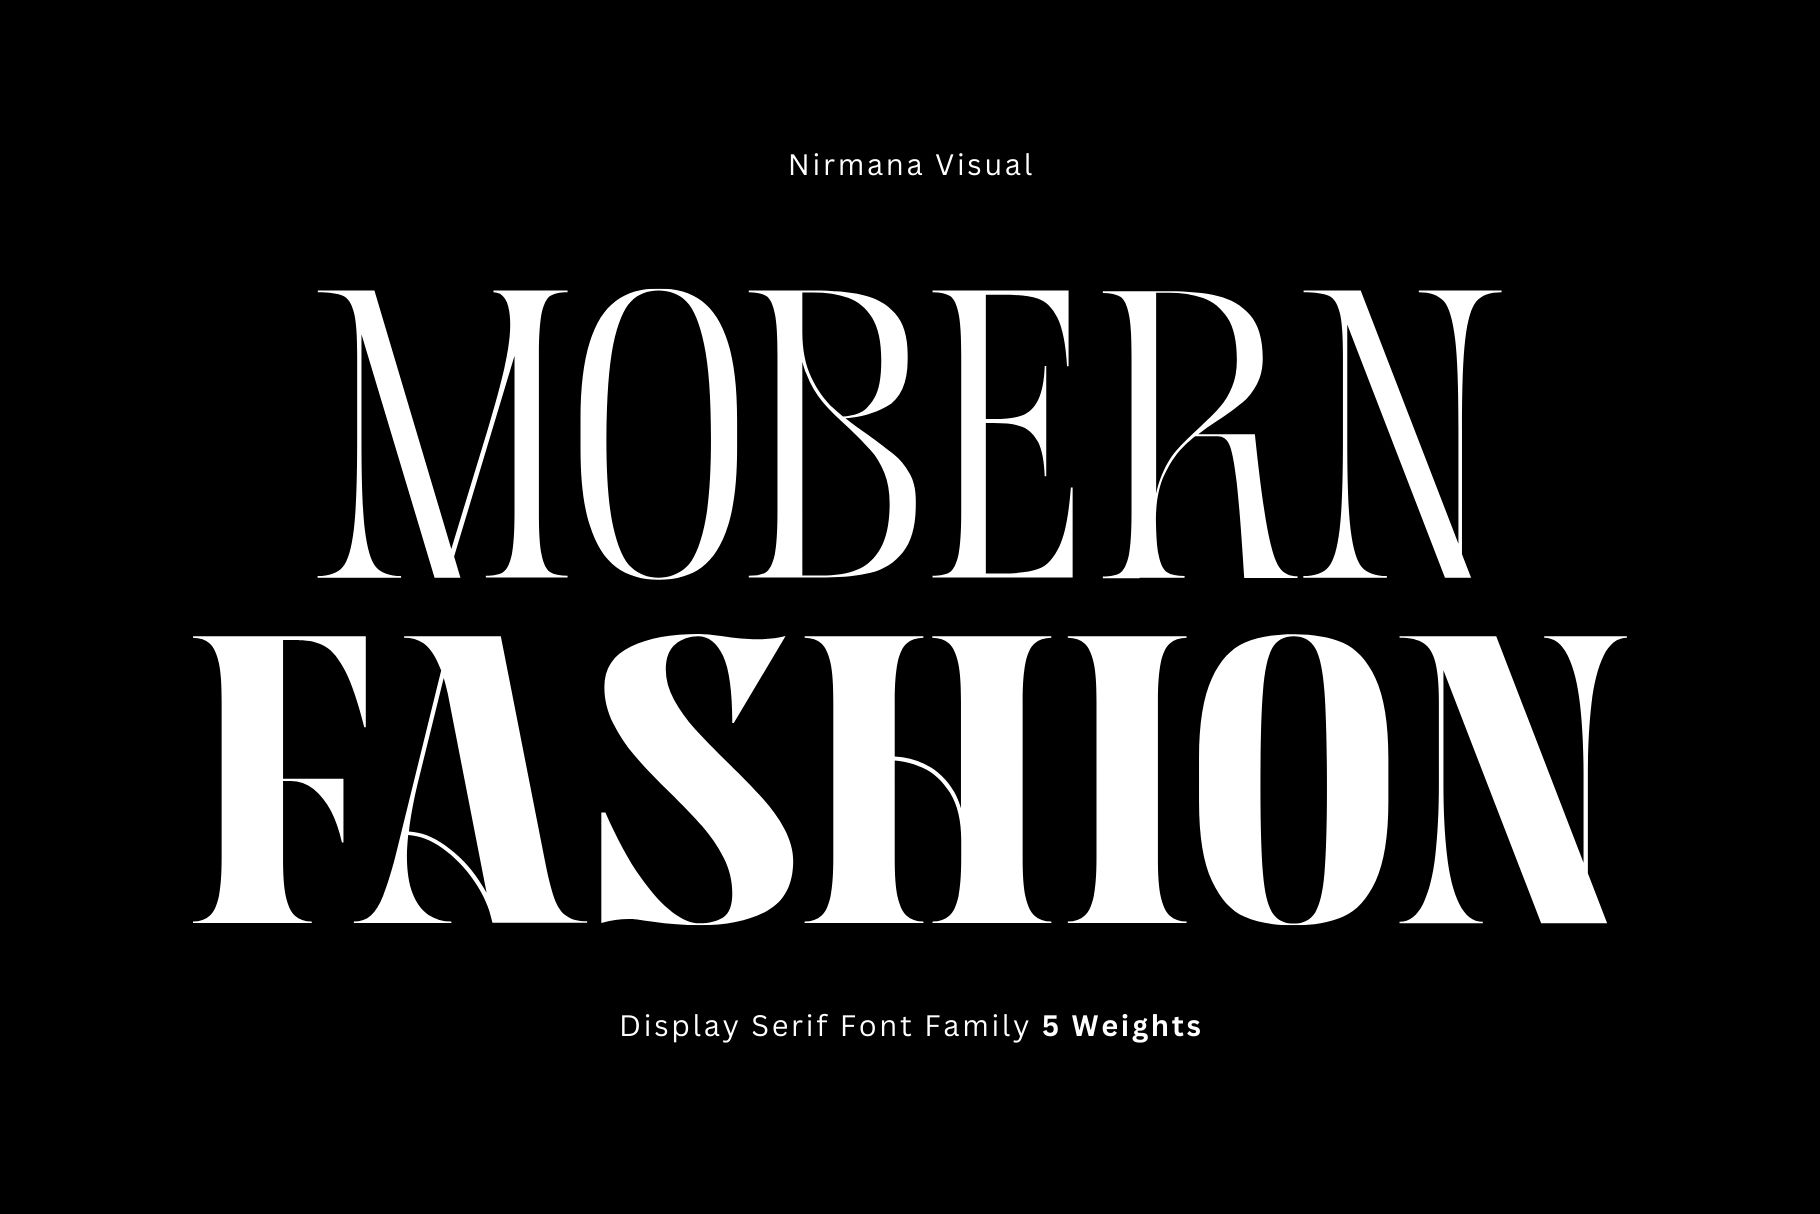 Mobern Fashion - Demo Version Black